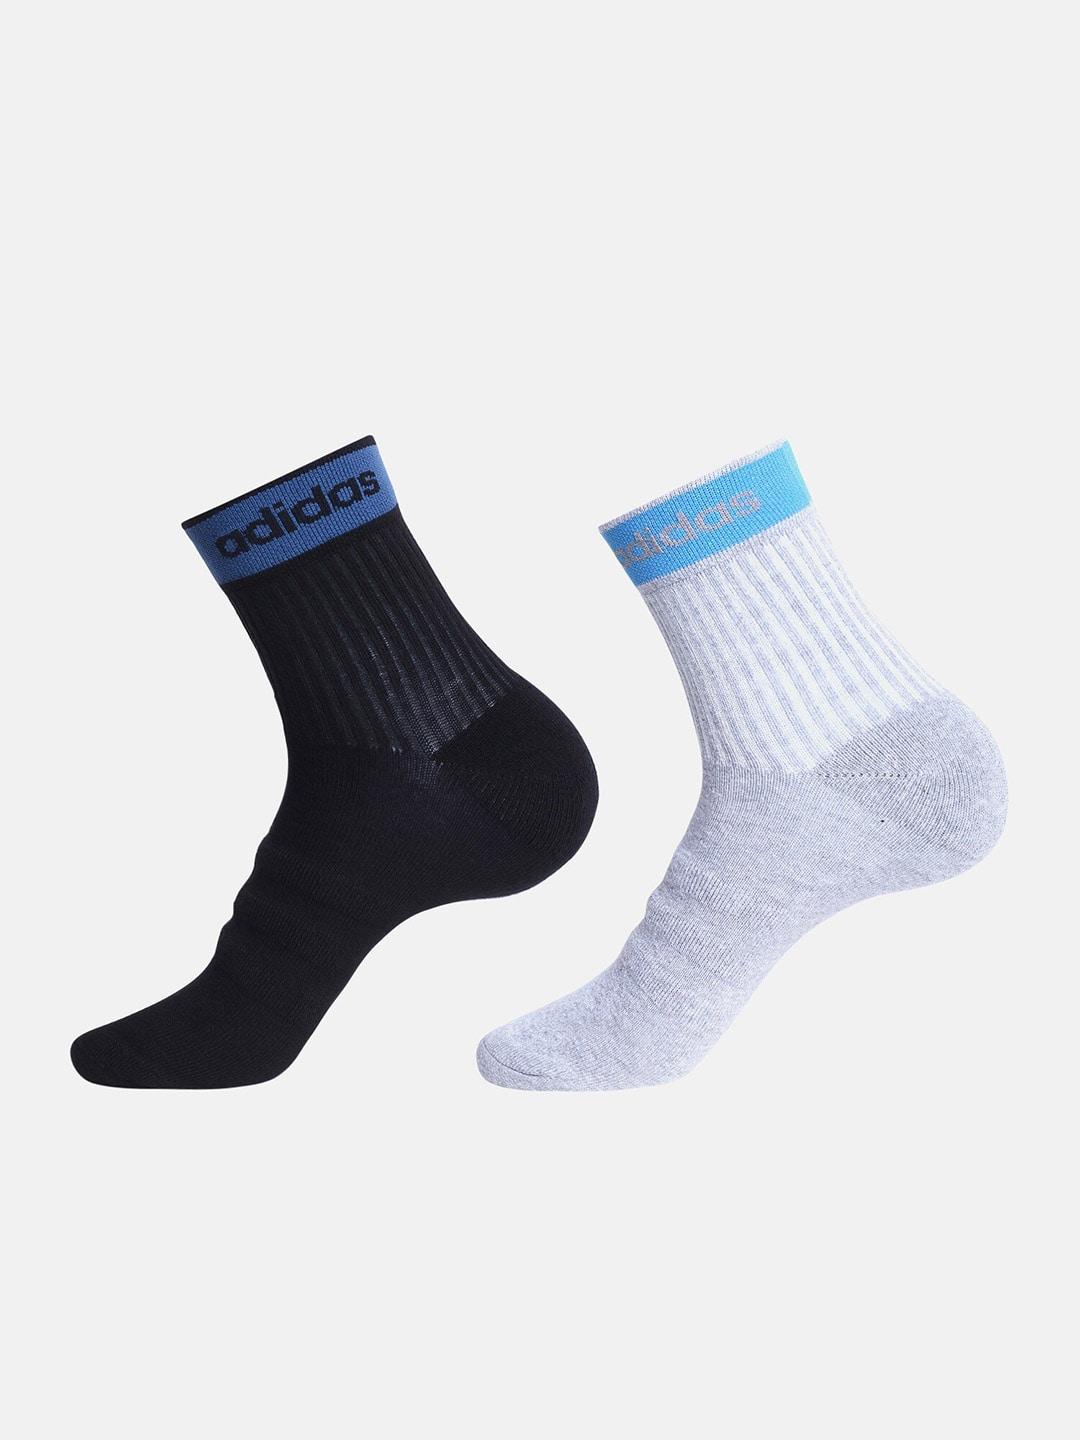 ADIDAS Men Pack Of 2 Patterned Heel & Toe Cushion Above Ankle-Length Socks